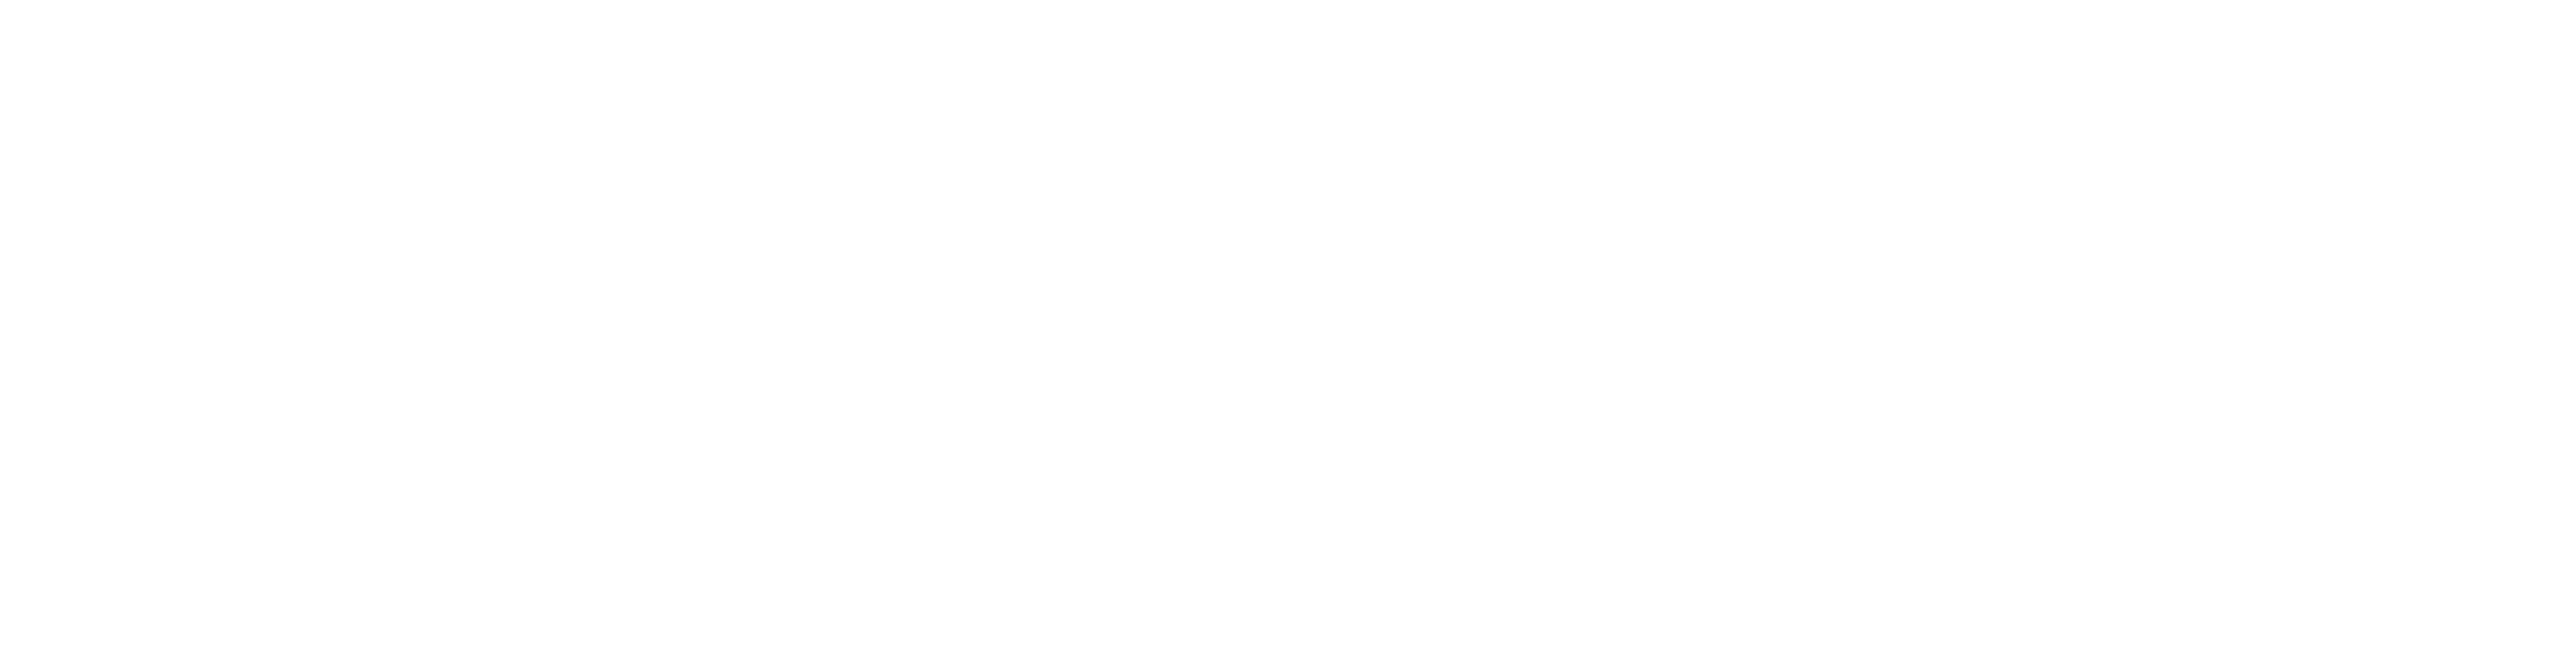 international drivers permit logo white